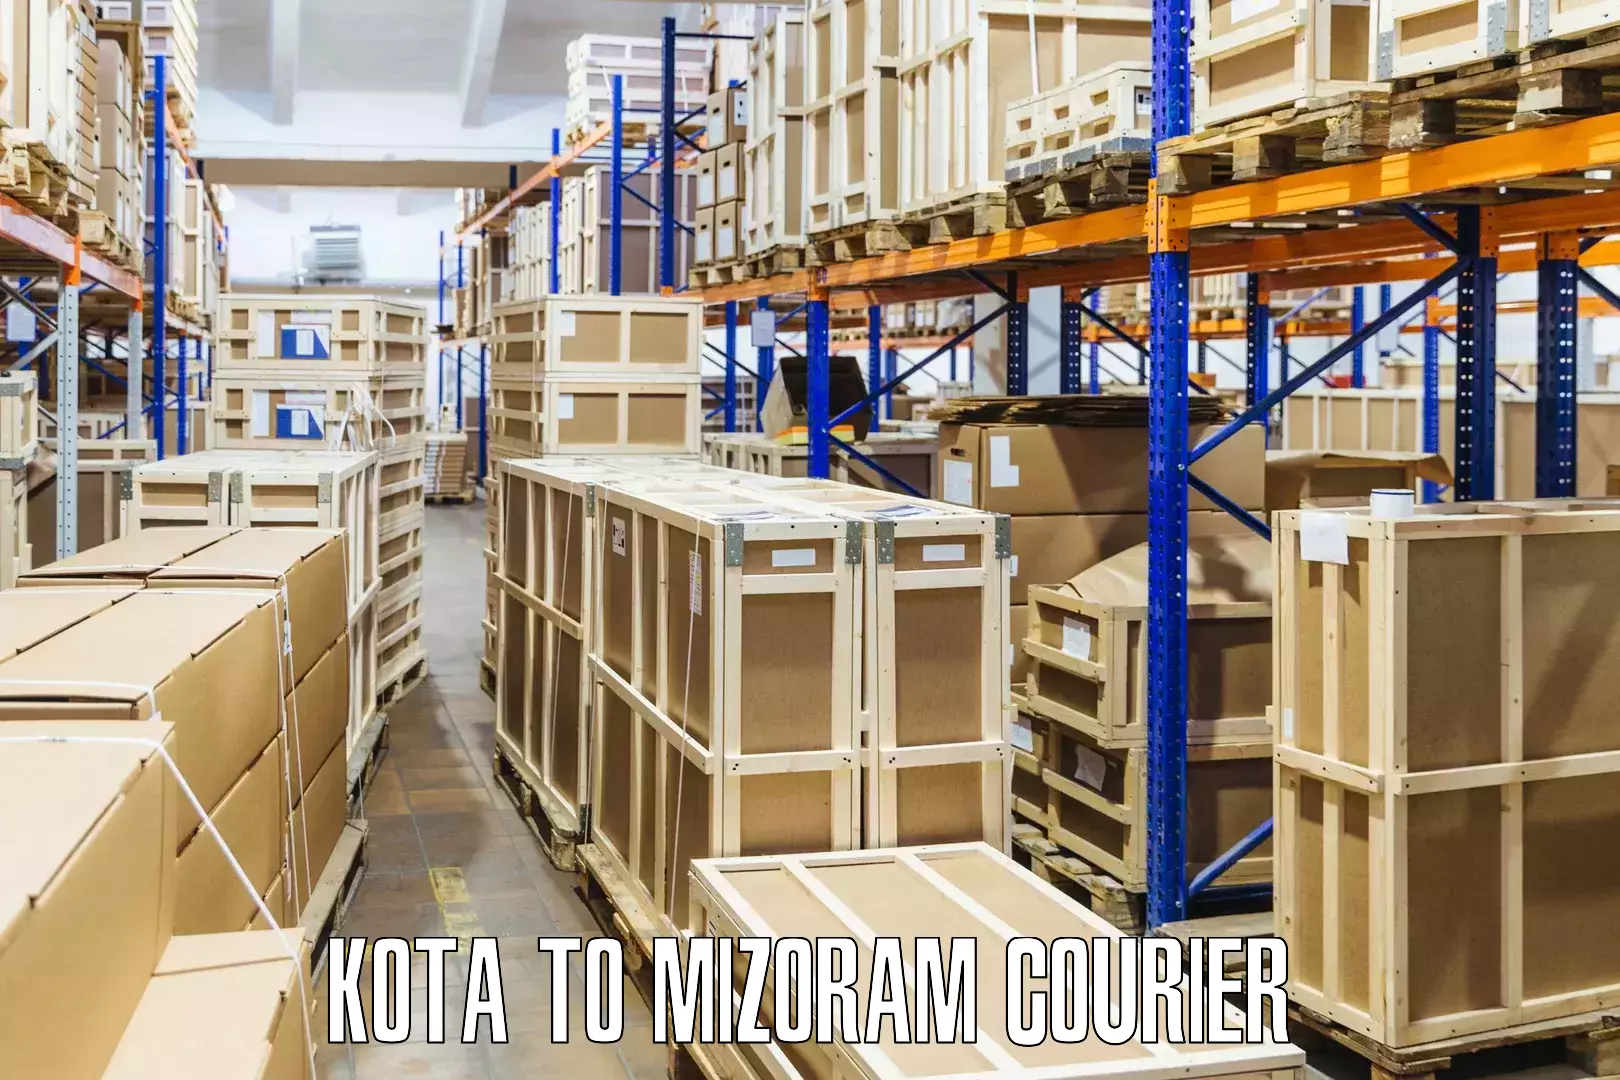 Courier service partnerships Kota to Mizoram